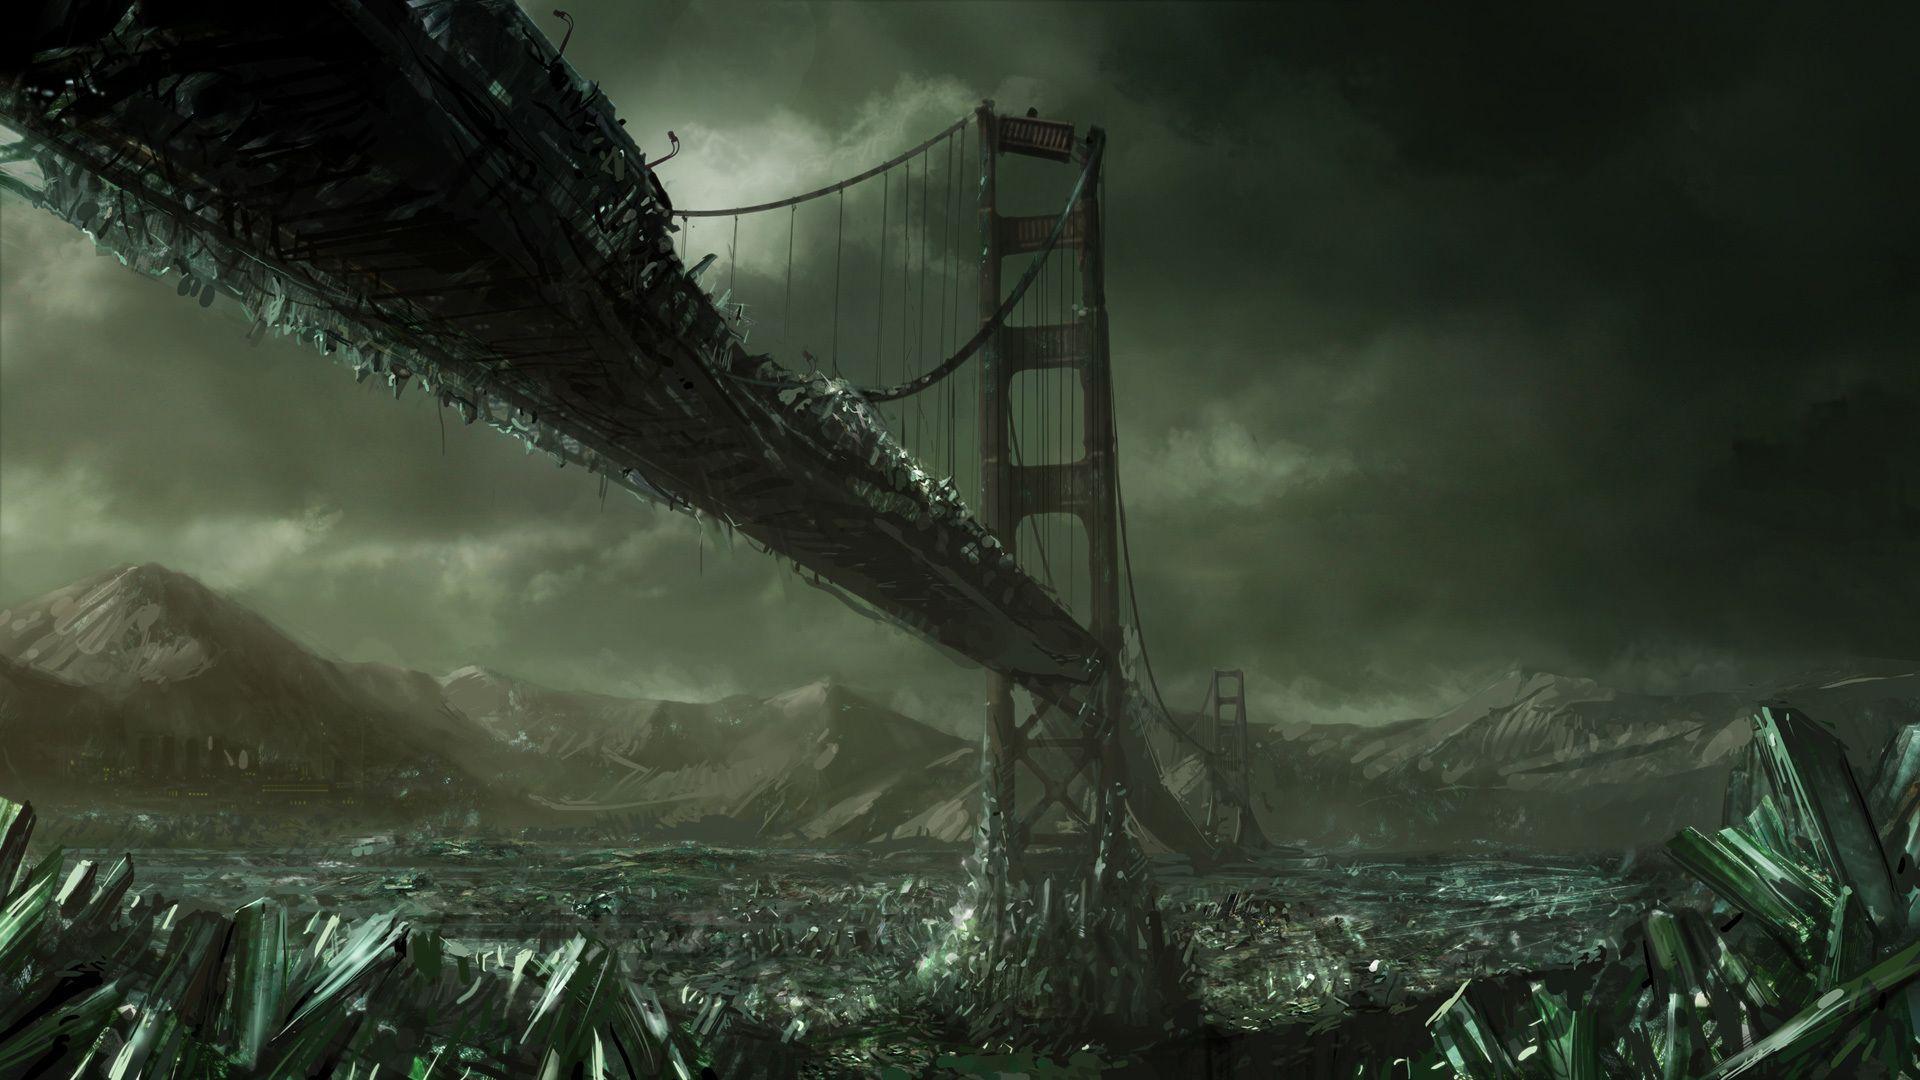 Bridge, post apocalyptic wallpaper and image